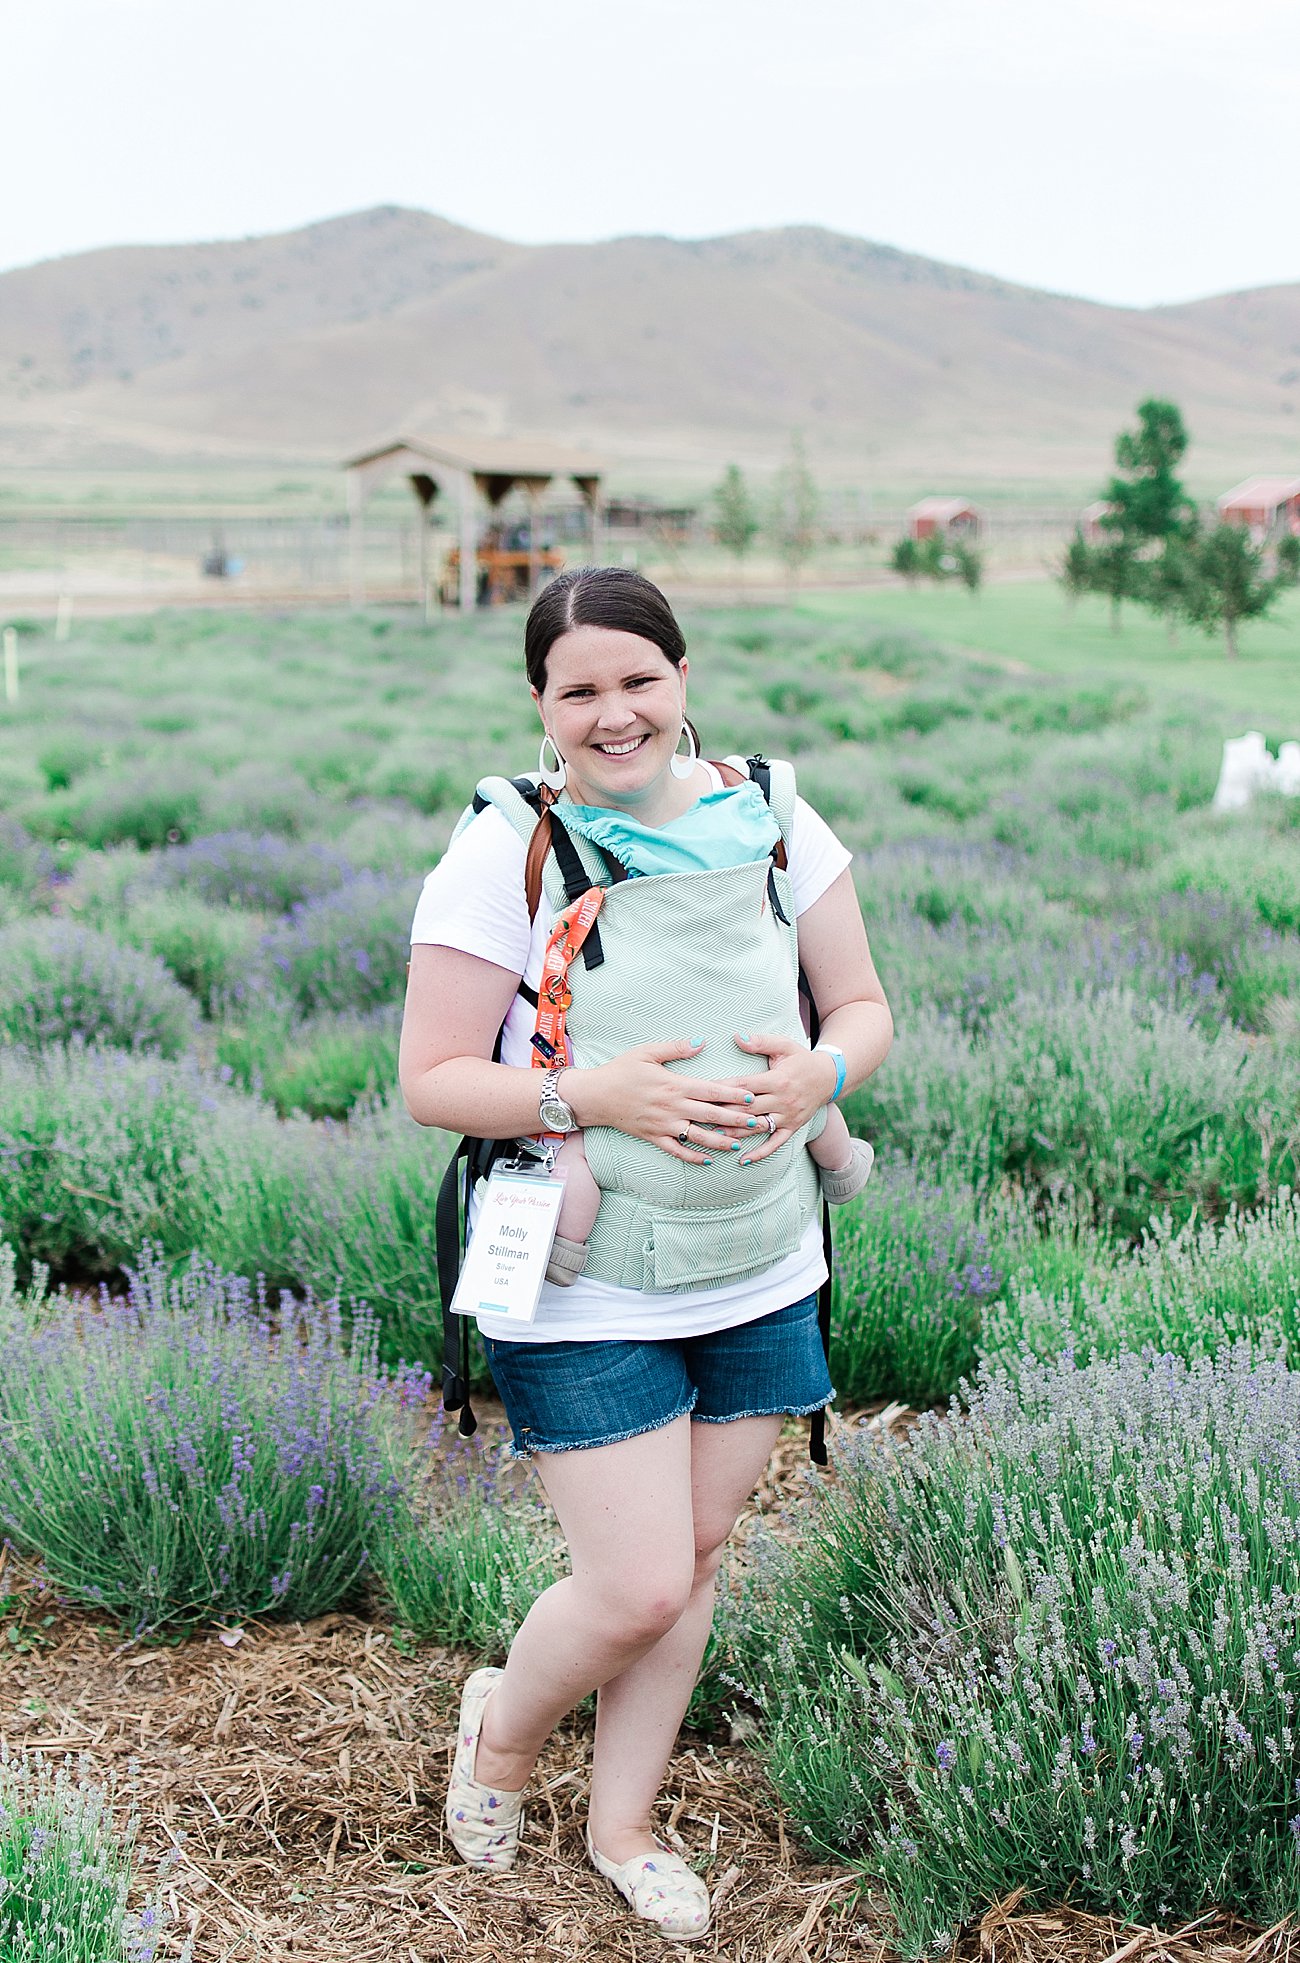 Young Living Lavender Farm, Mona, Utah (51)